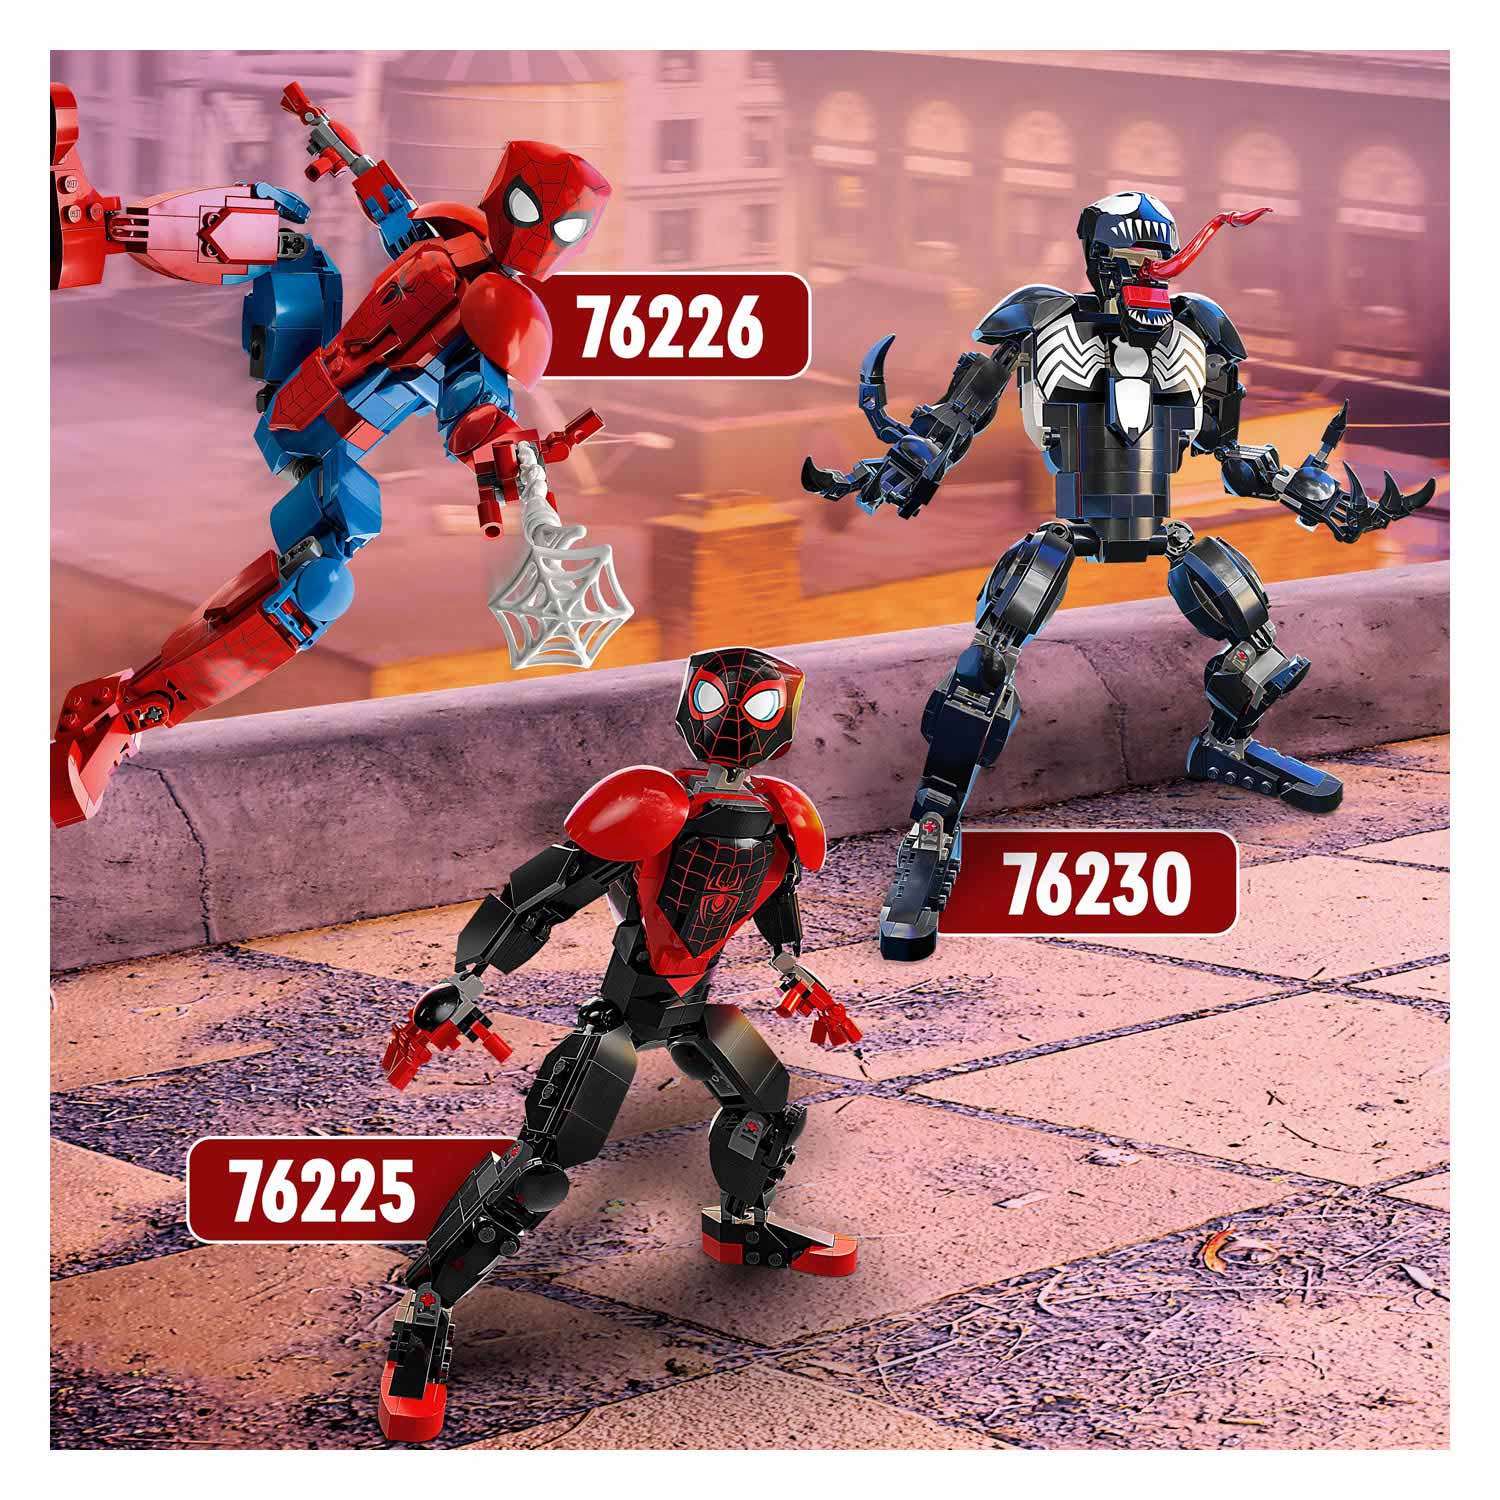 LEGO Super Heroes 76226 Spider-Man-Figur